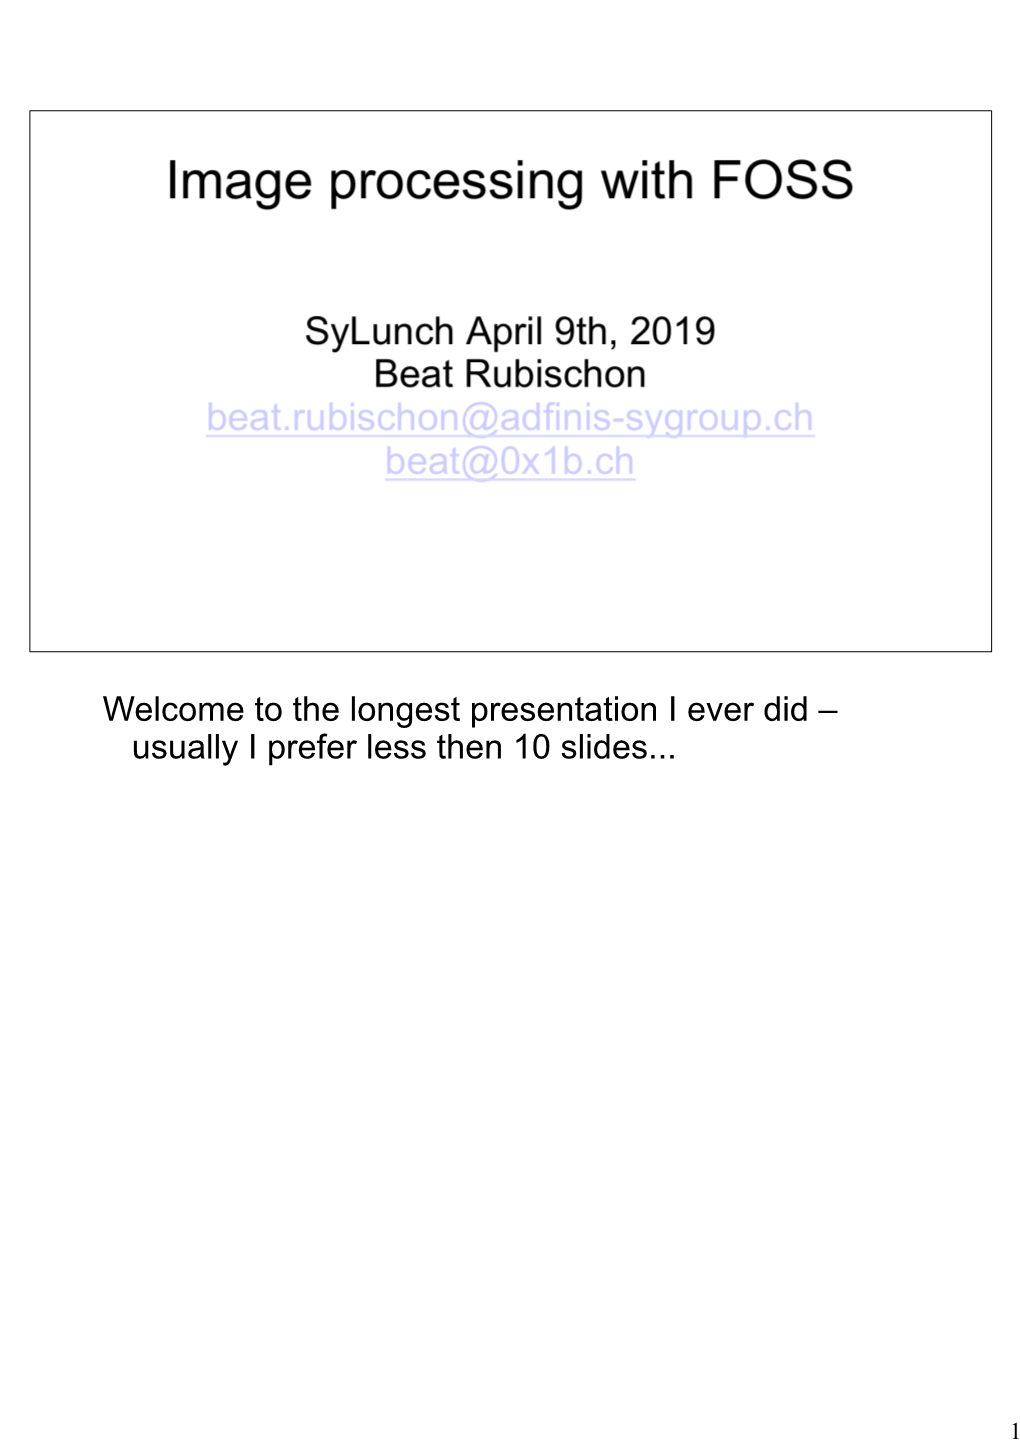 The Longest Presentation I Ever Did – Usually I Prefer Less Then 10 Slides